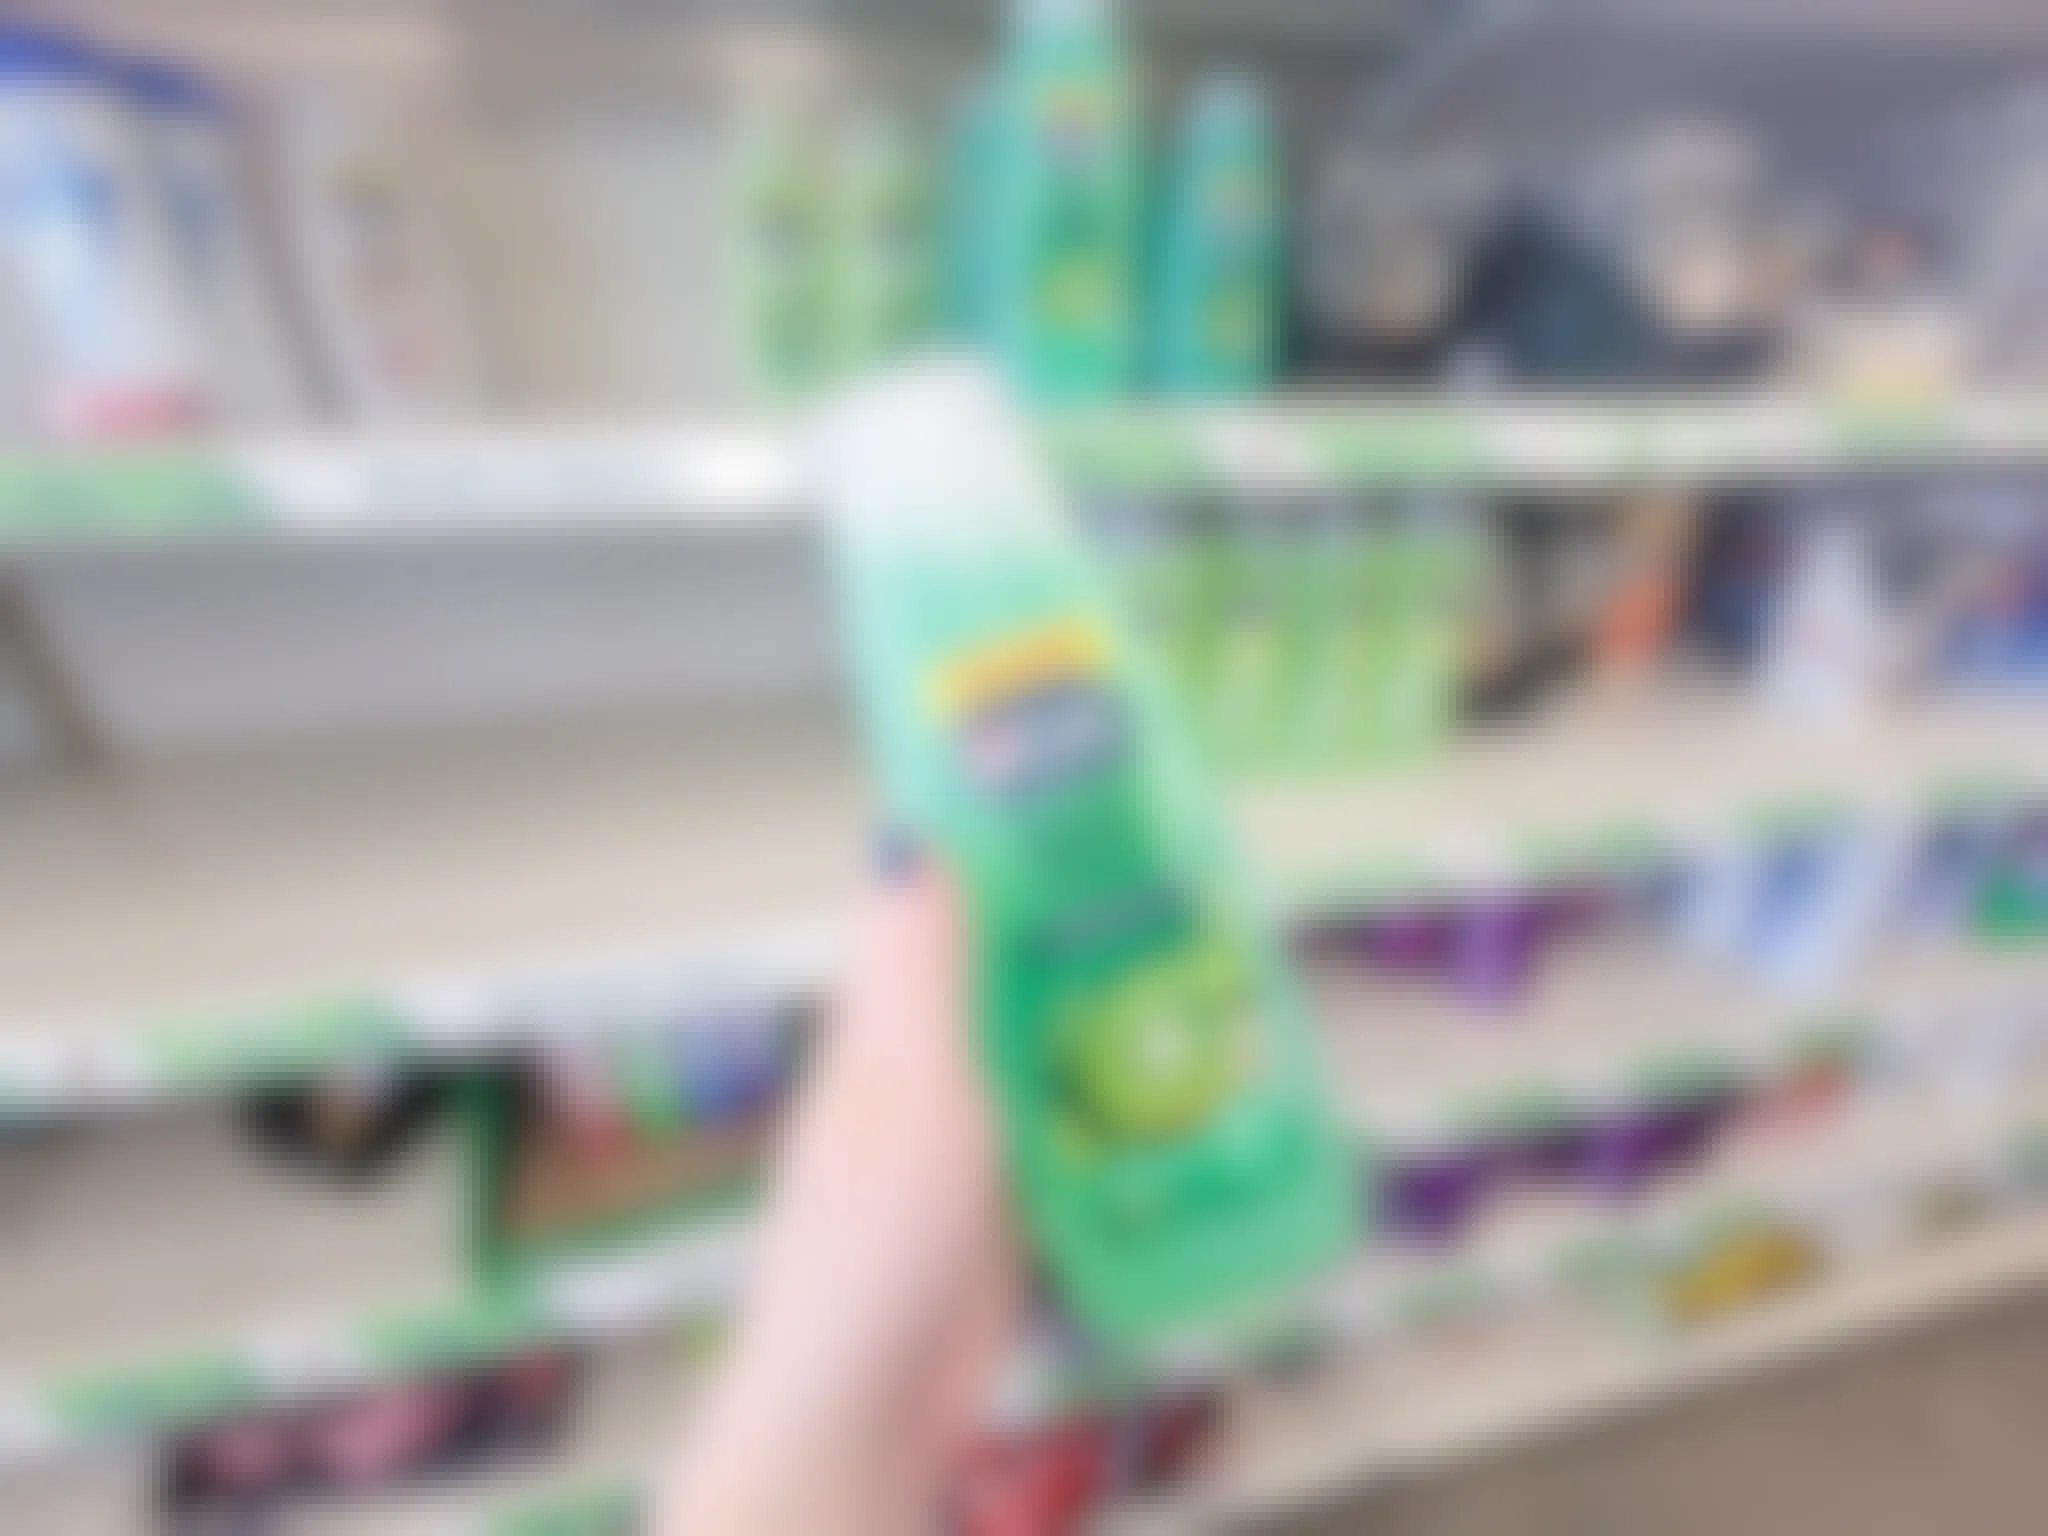 hand holding a bottle of kiwi vo5 shampoo